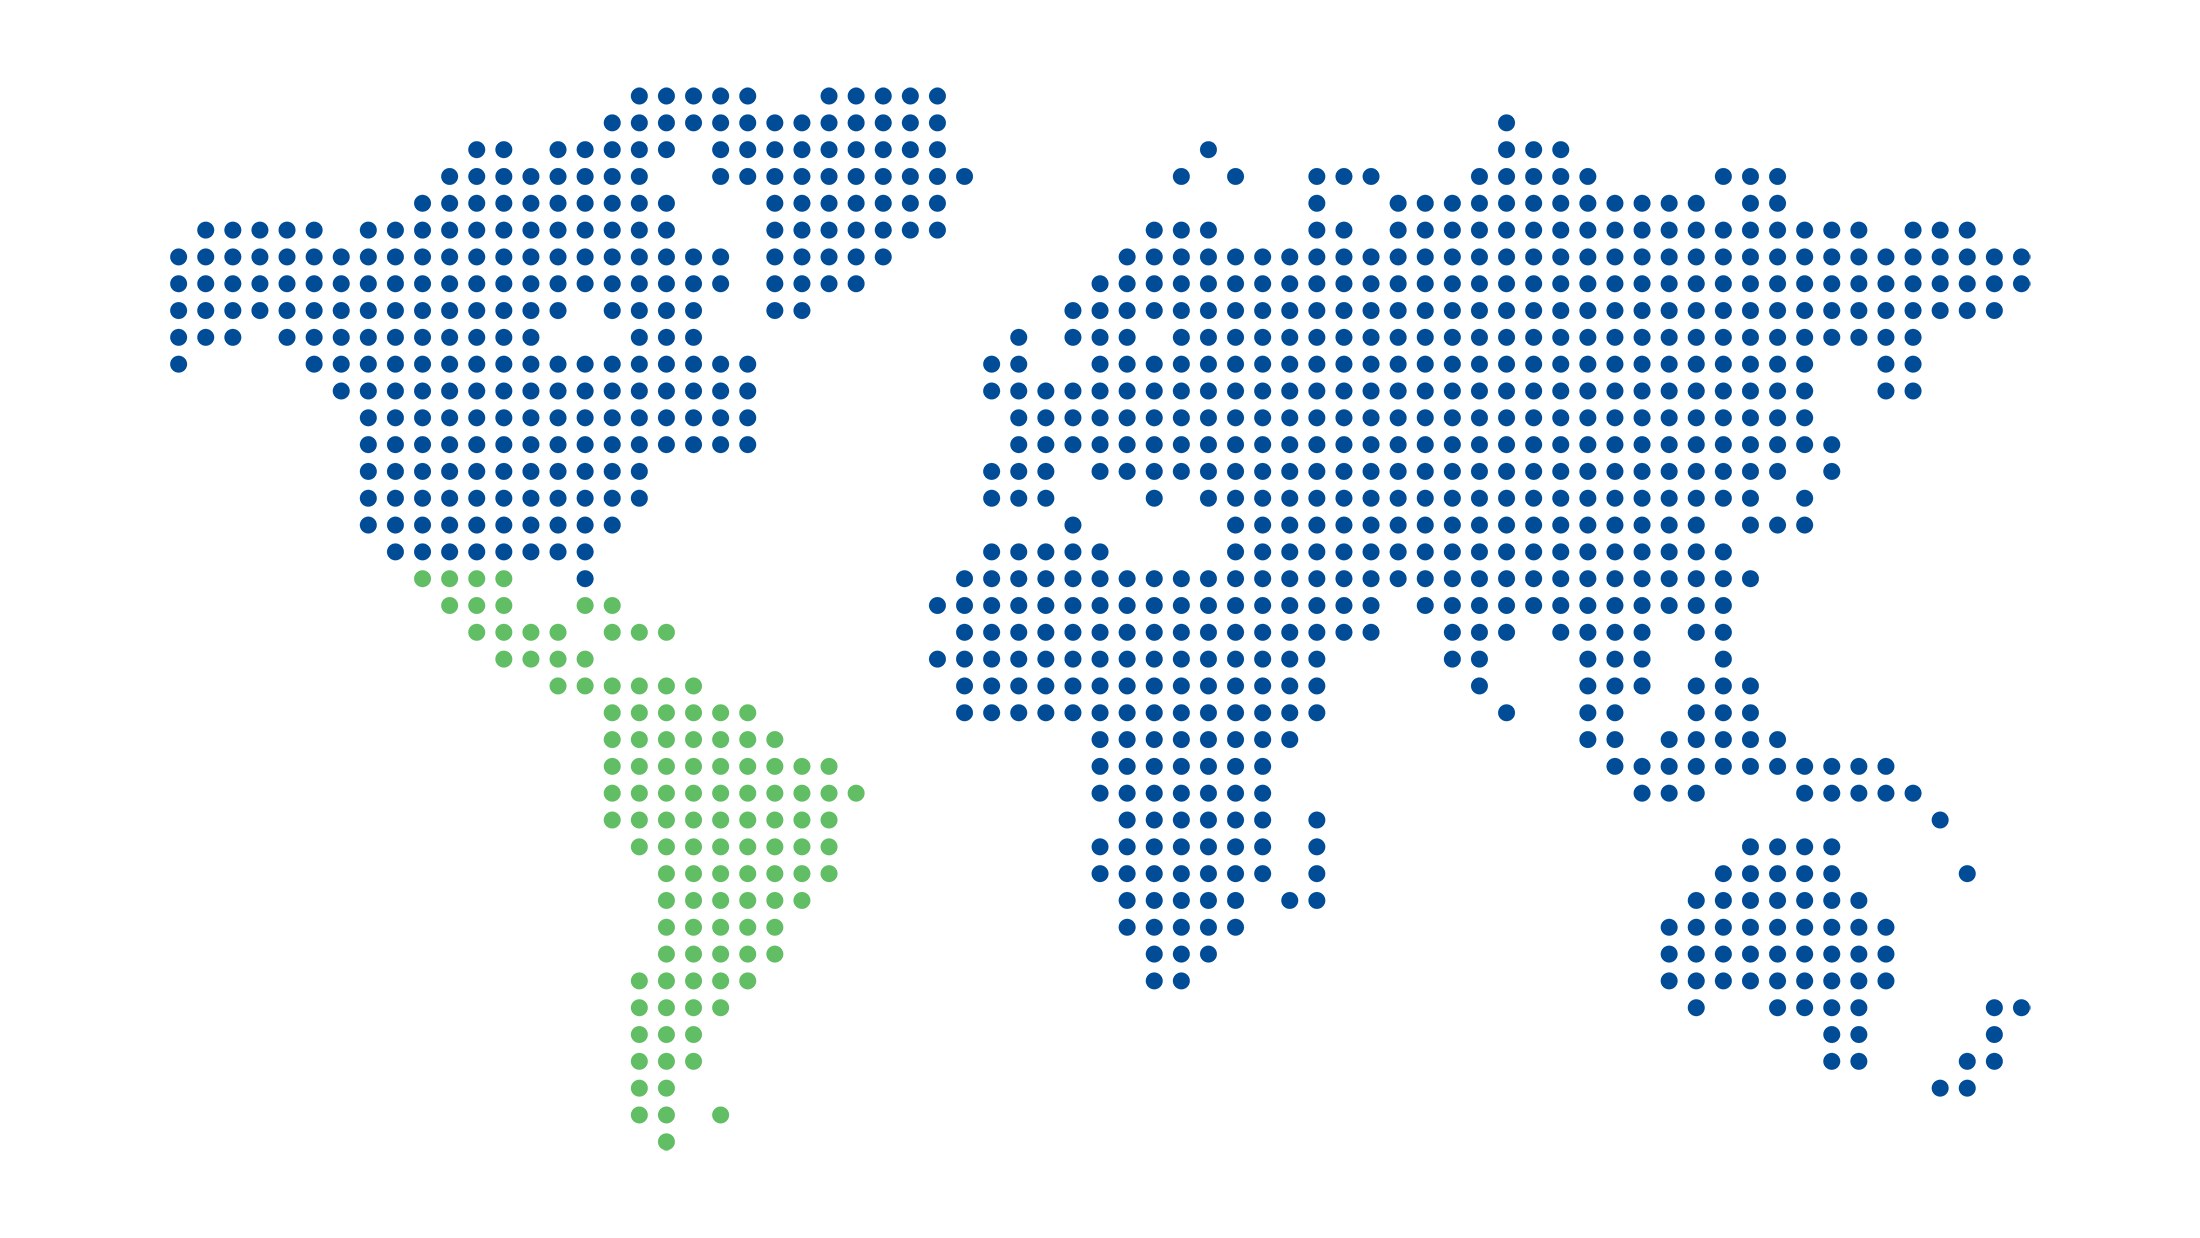 World map highlighting PepsiCo's Latin America sector